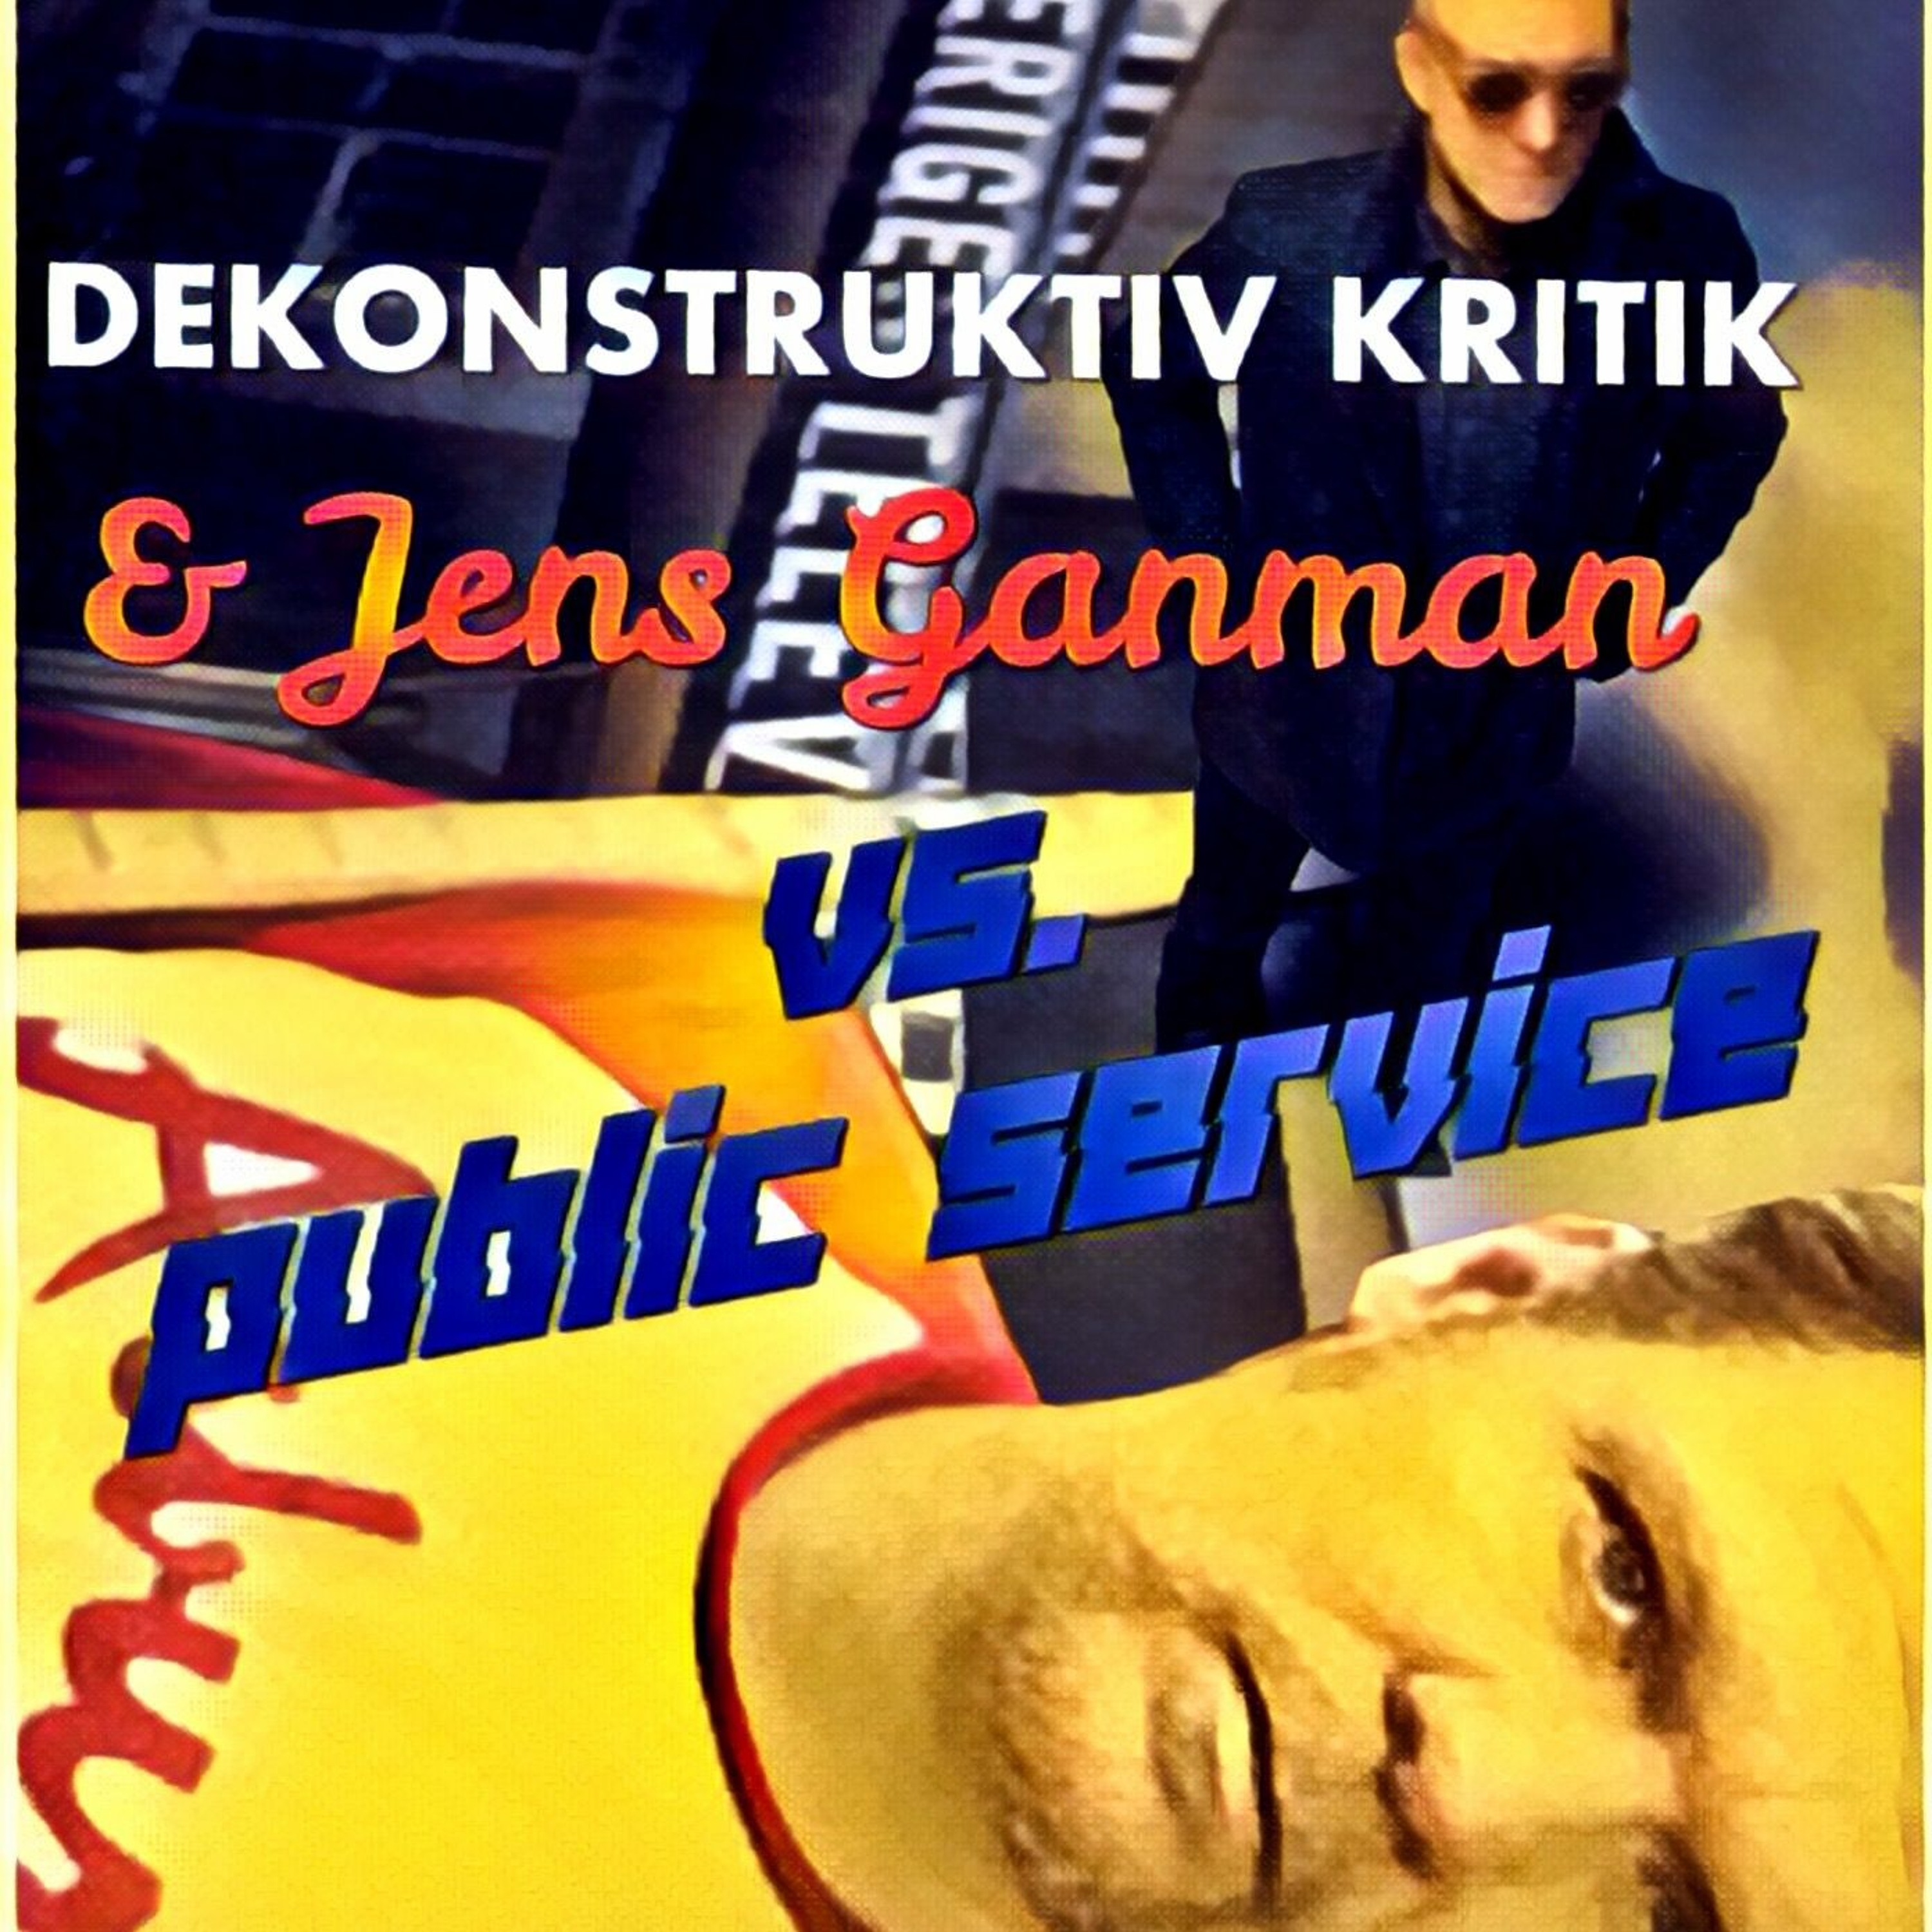 6.4 DEKONSTRUKTIV KRITIK & Jens Ganman Vs. Public Service